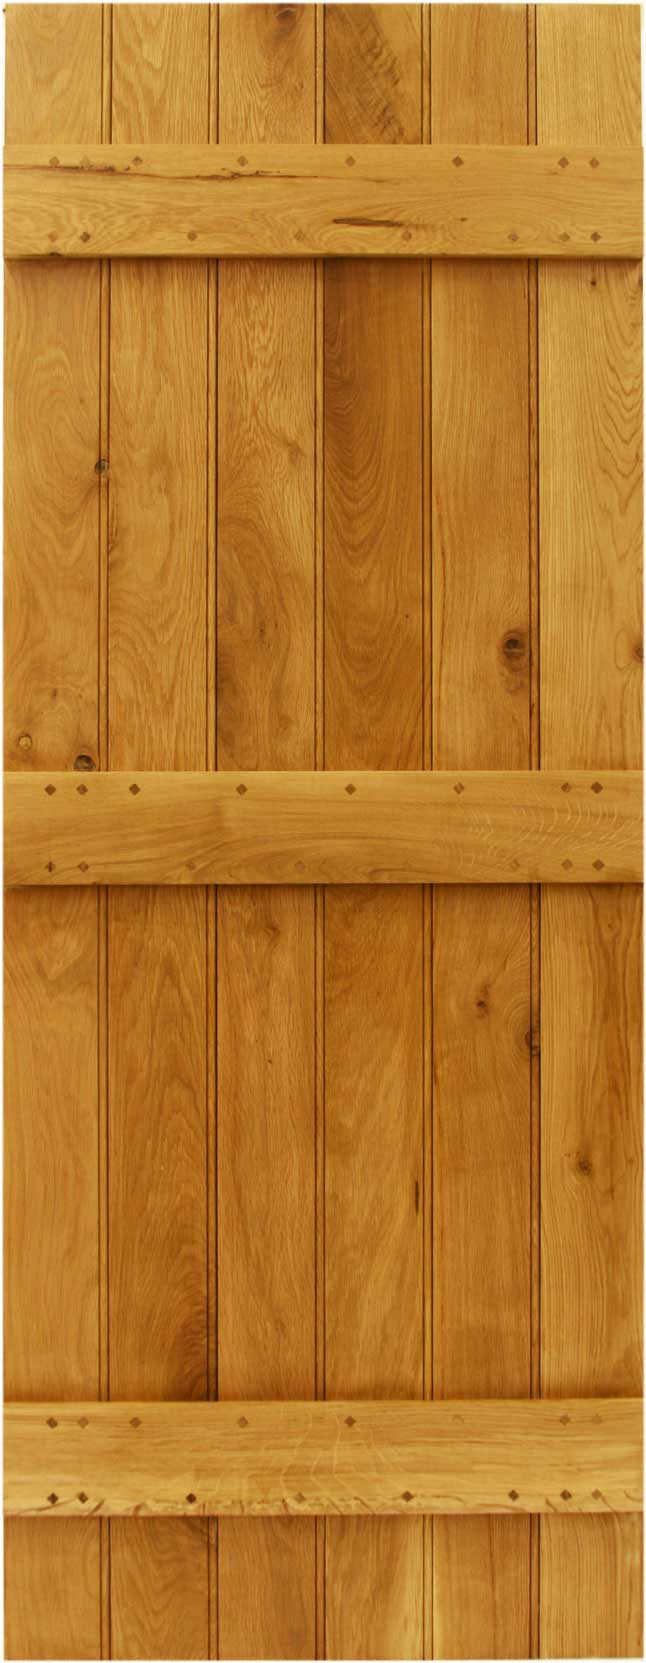 An image of Solid Oak Ledge With Optional Braces Door - 44mm Thick Prime Grade A Oak Warp Fr...